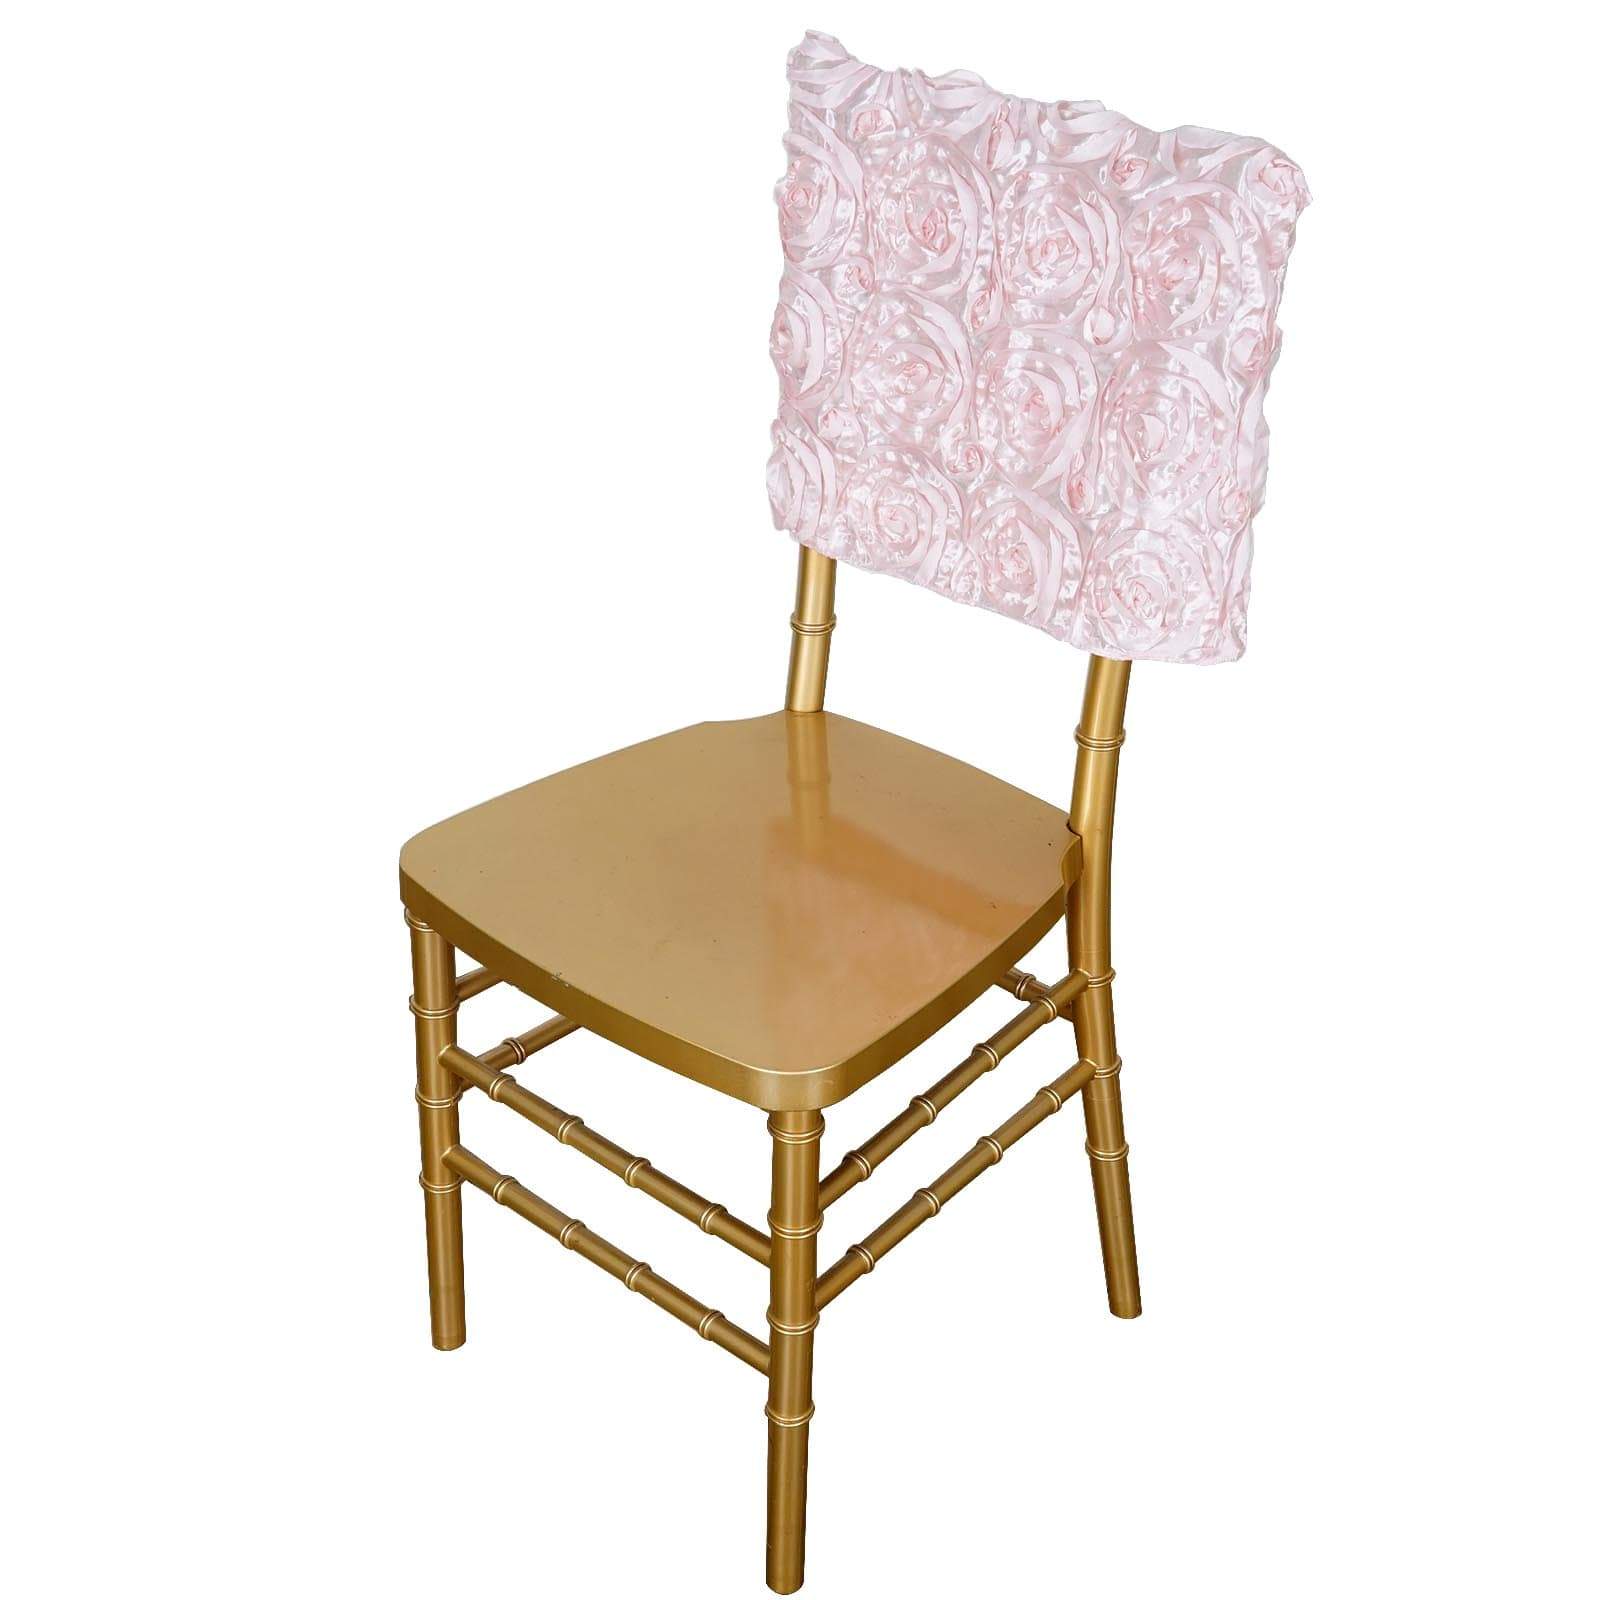 Satin Ribbon Roses Square Chair Cap Cover